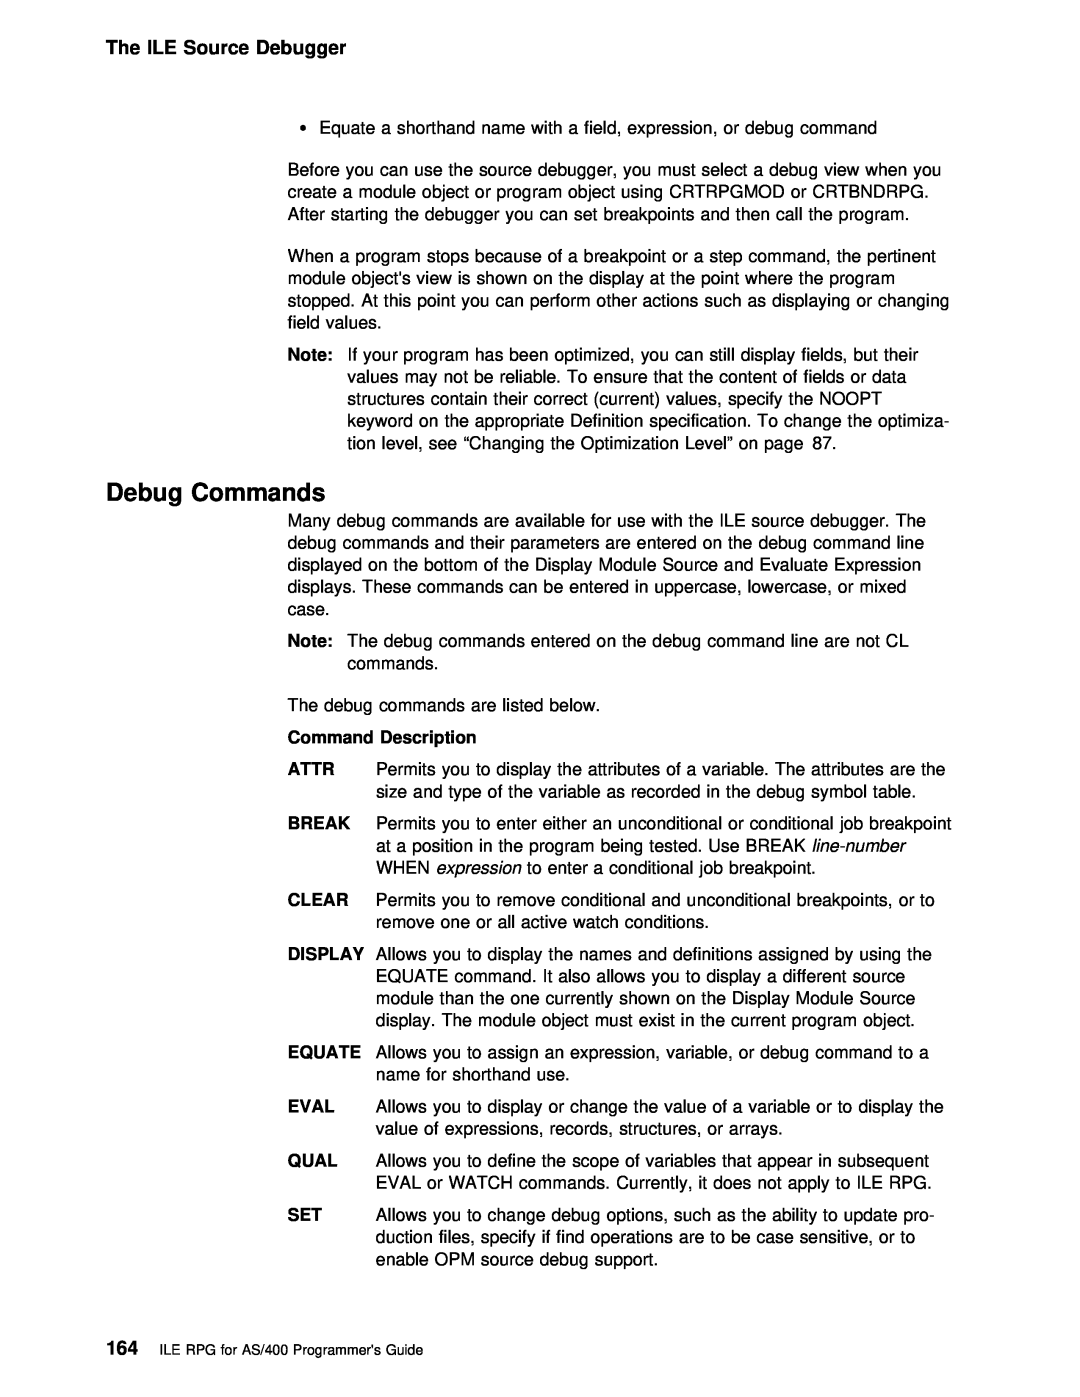 IBM AS/400 manual Debug Commands, The ILE Source Debugger, Attr, Equate, Eval, Qual 